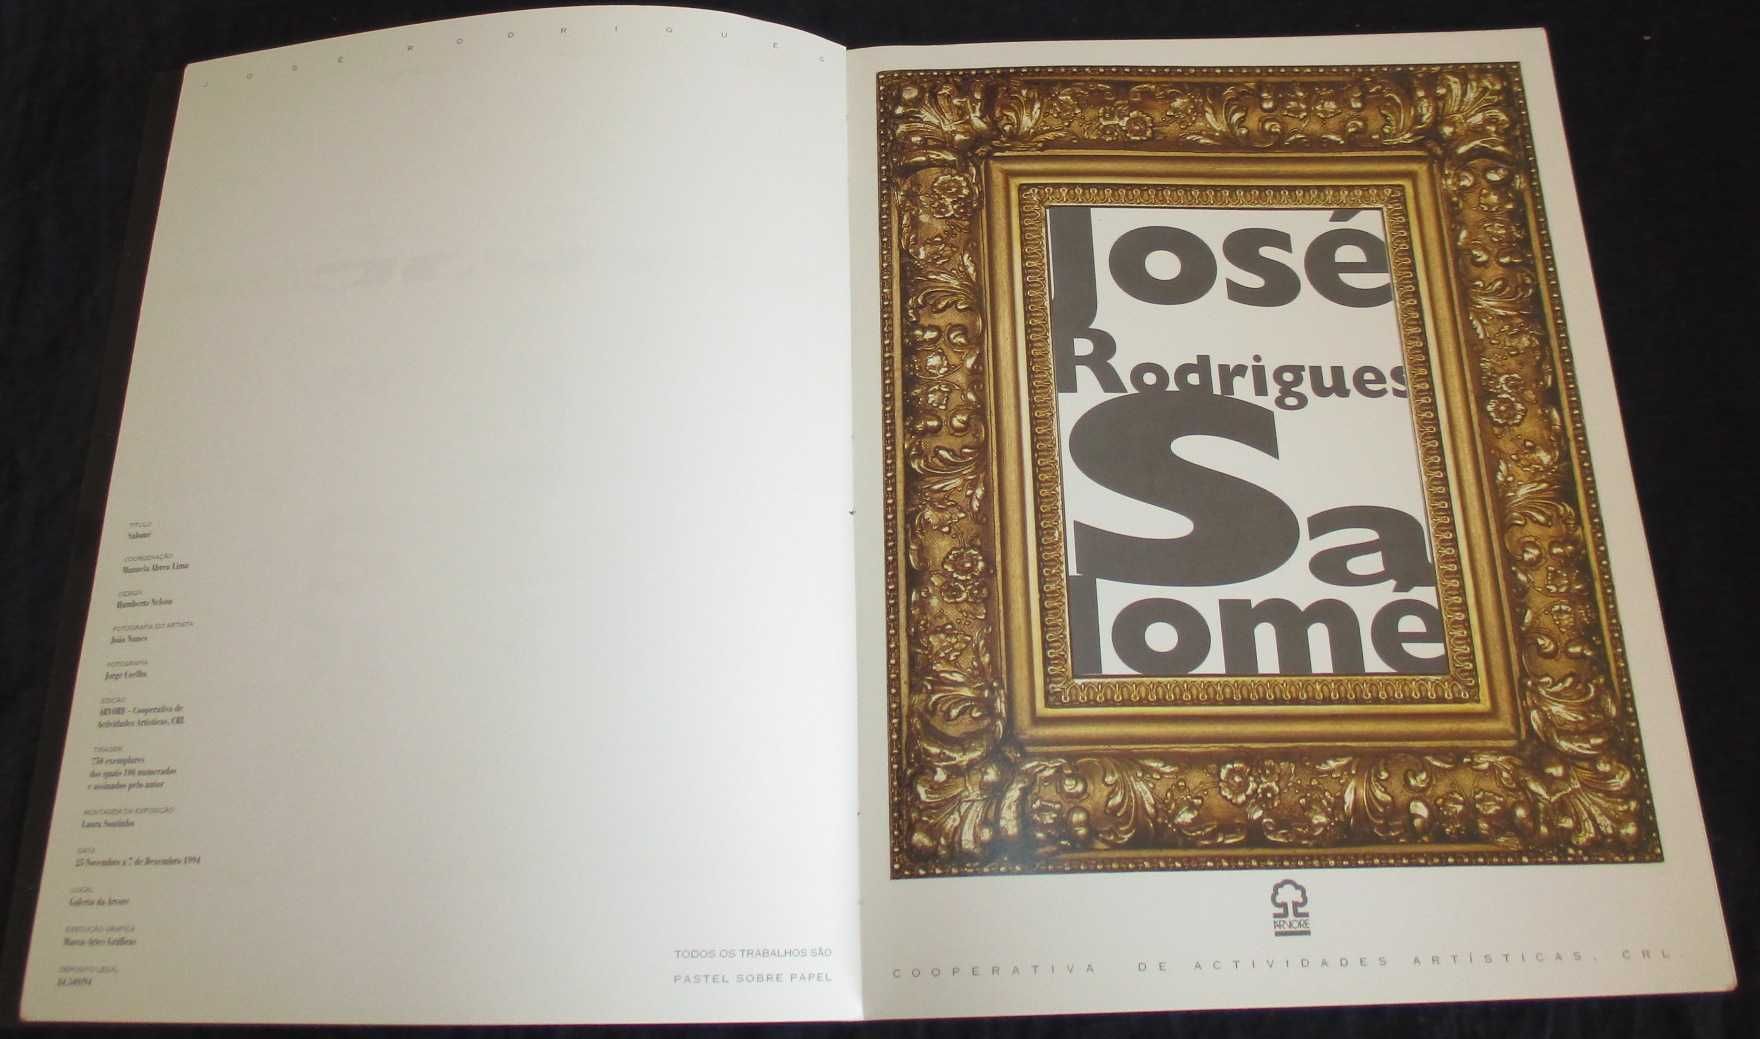 Livros Salomé e Acerca de Anjos José Rodrigues